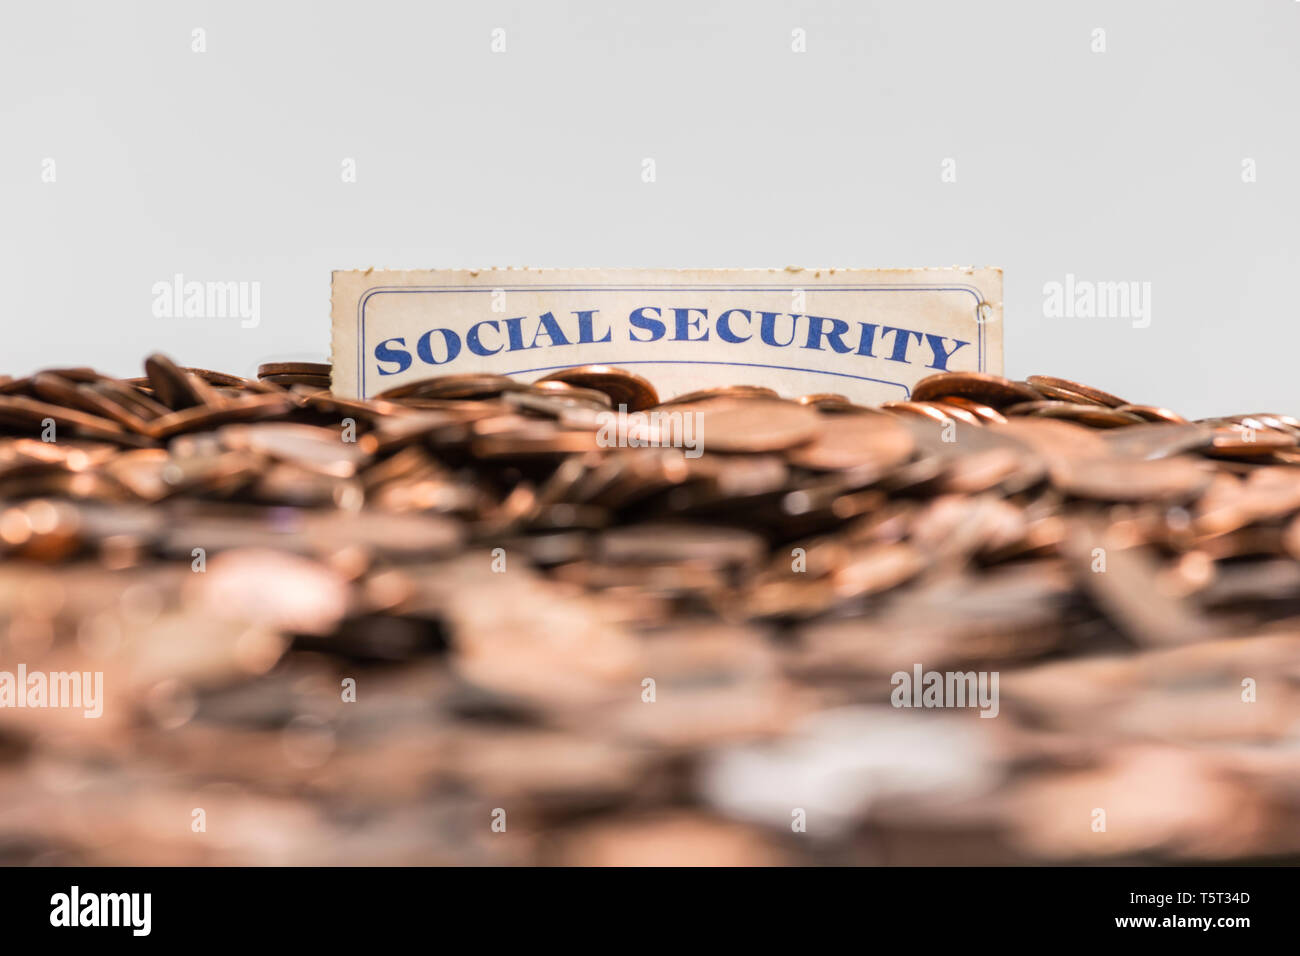 Social Security Card in einem erdhügel Kupfer Pennies begraben. Stockfoto